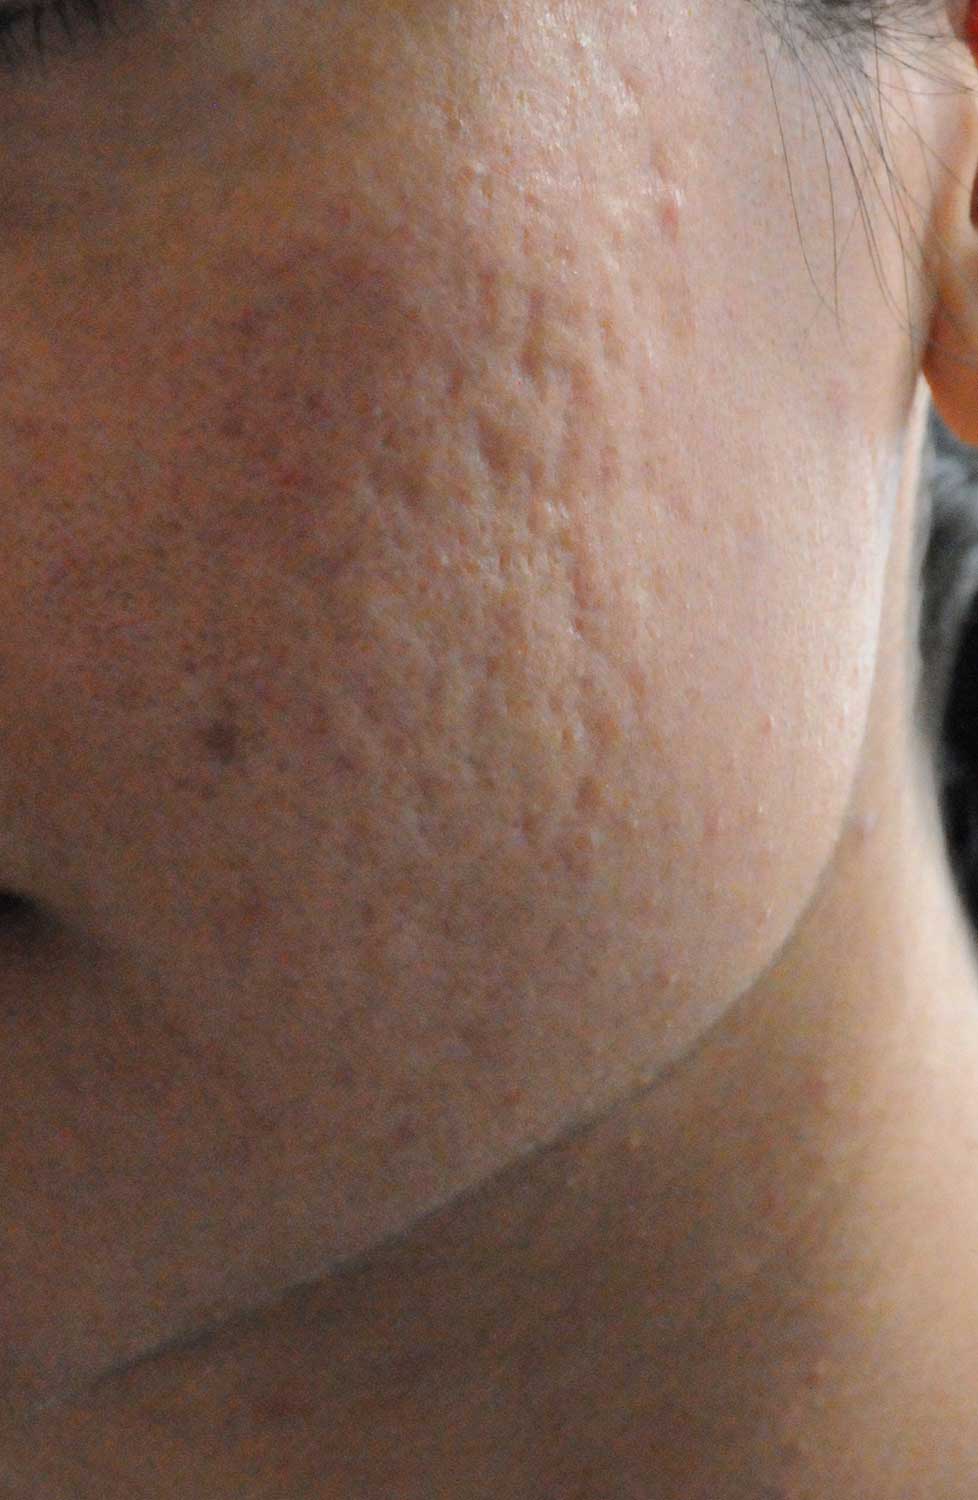 Acne Scar Vitalizer Before Treatment